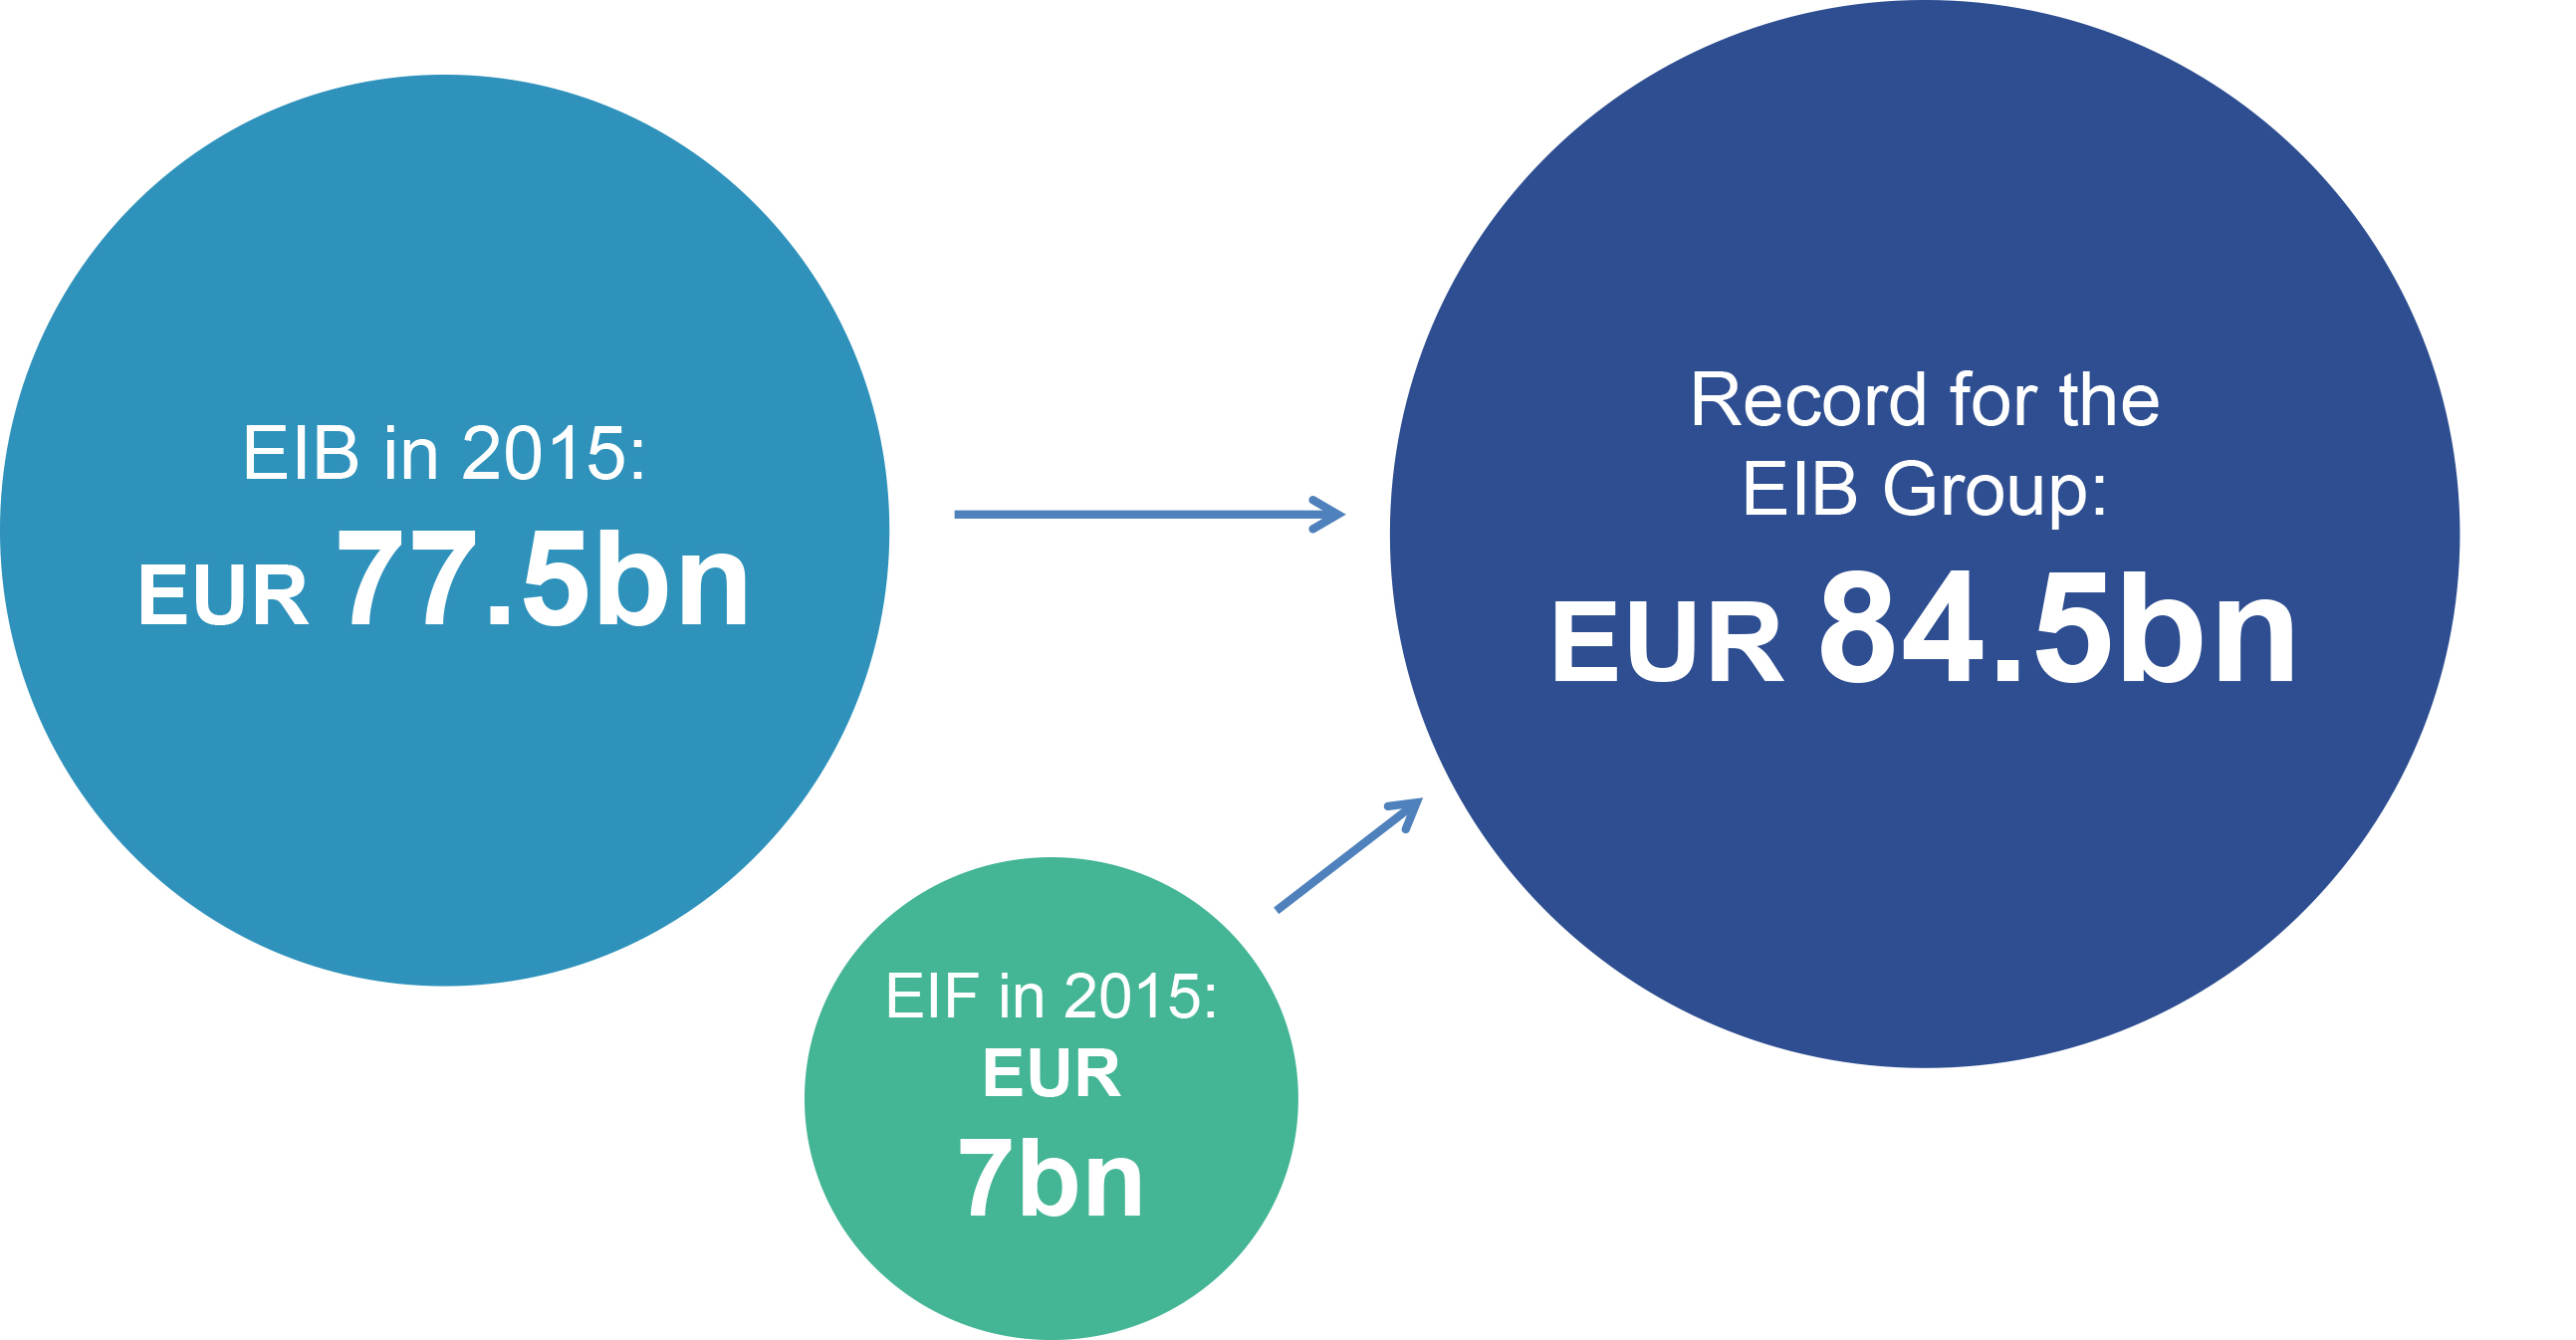 Summary of EIB lending in 2016